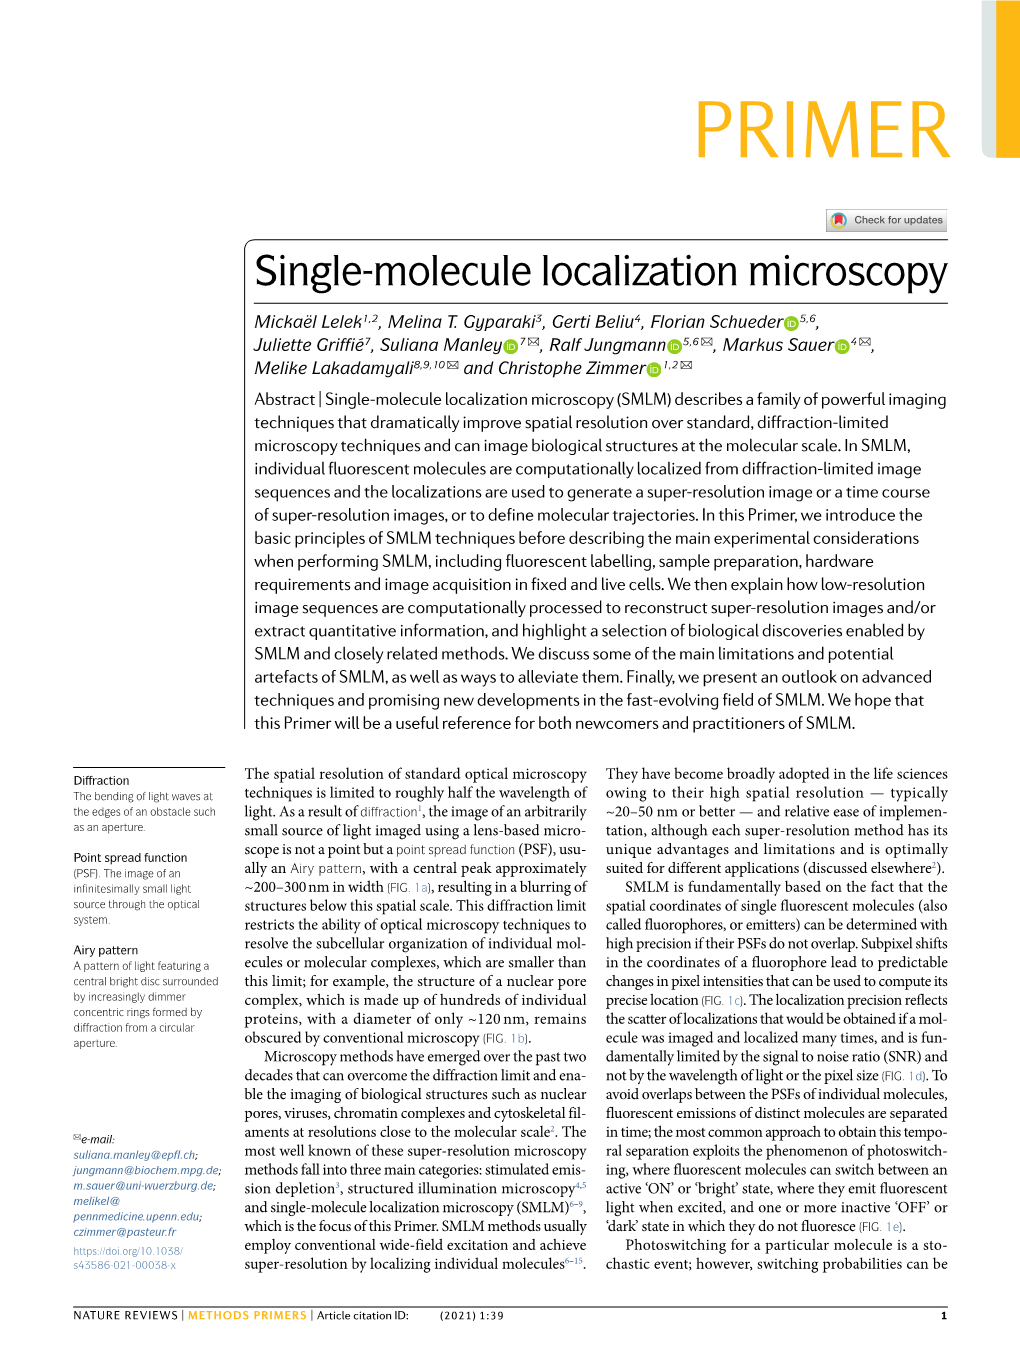 Single-Molecule Localization Microscopy Hardware